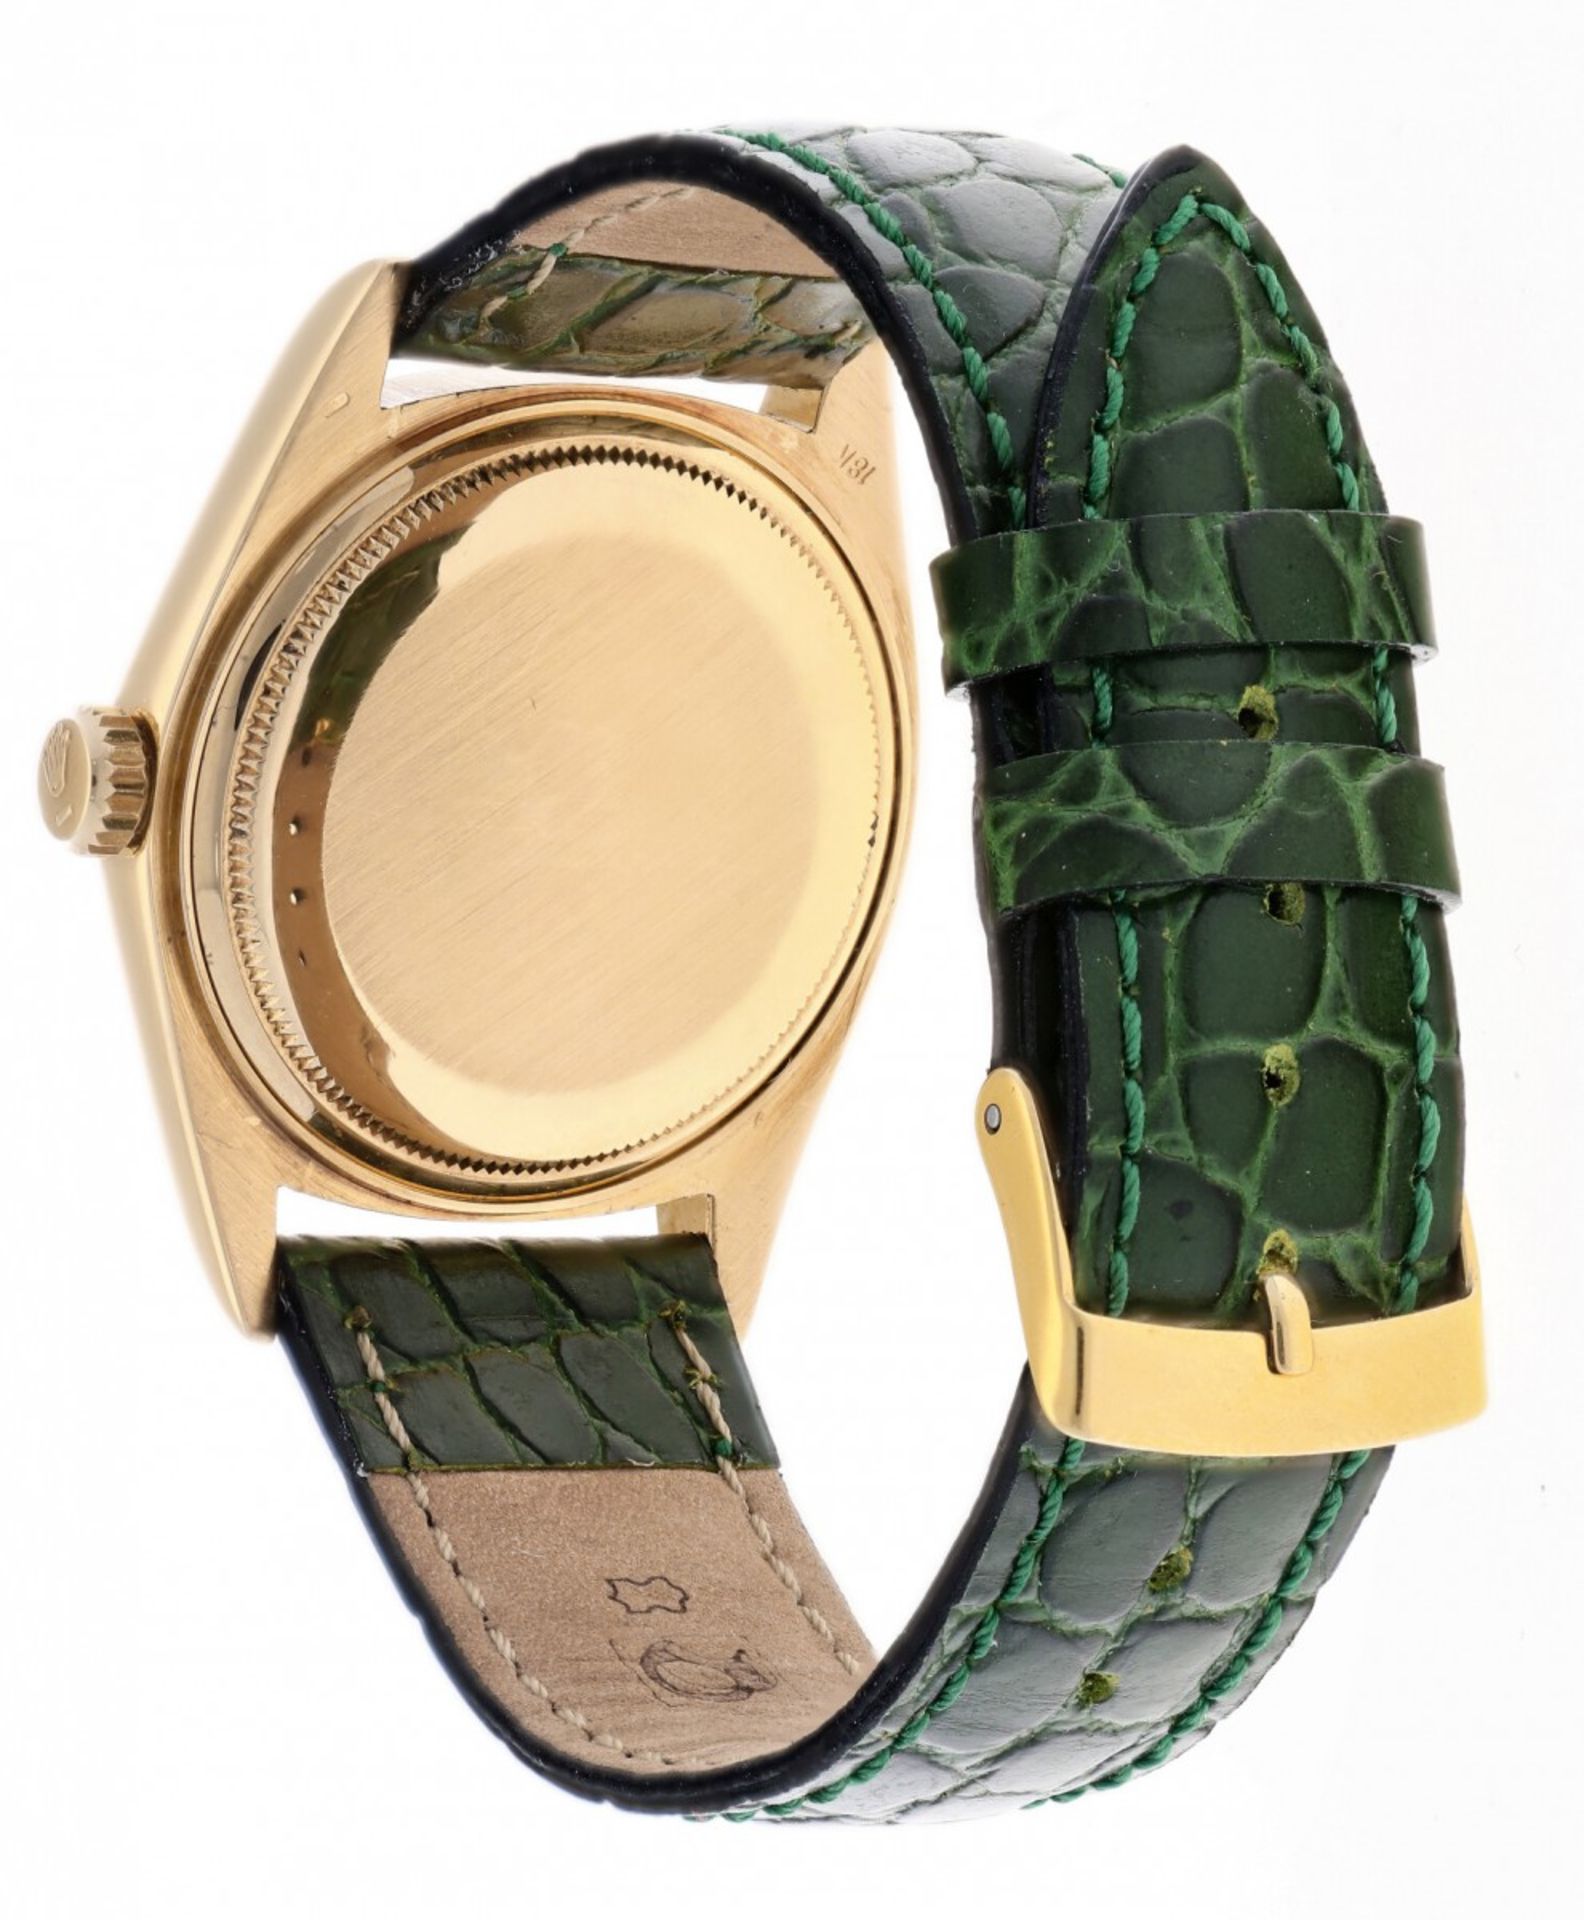 Rolex day date 1803 - Men's watch - ca. 1974 - Image 3 of 6